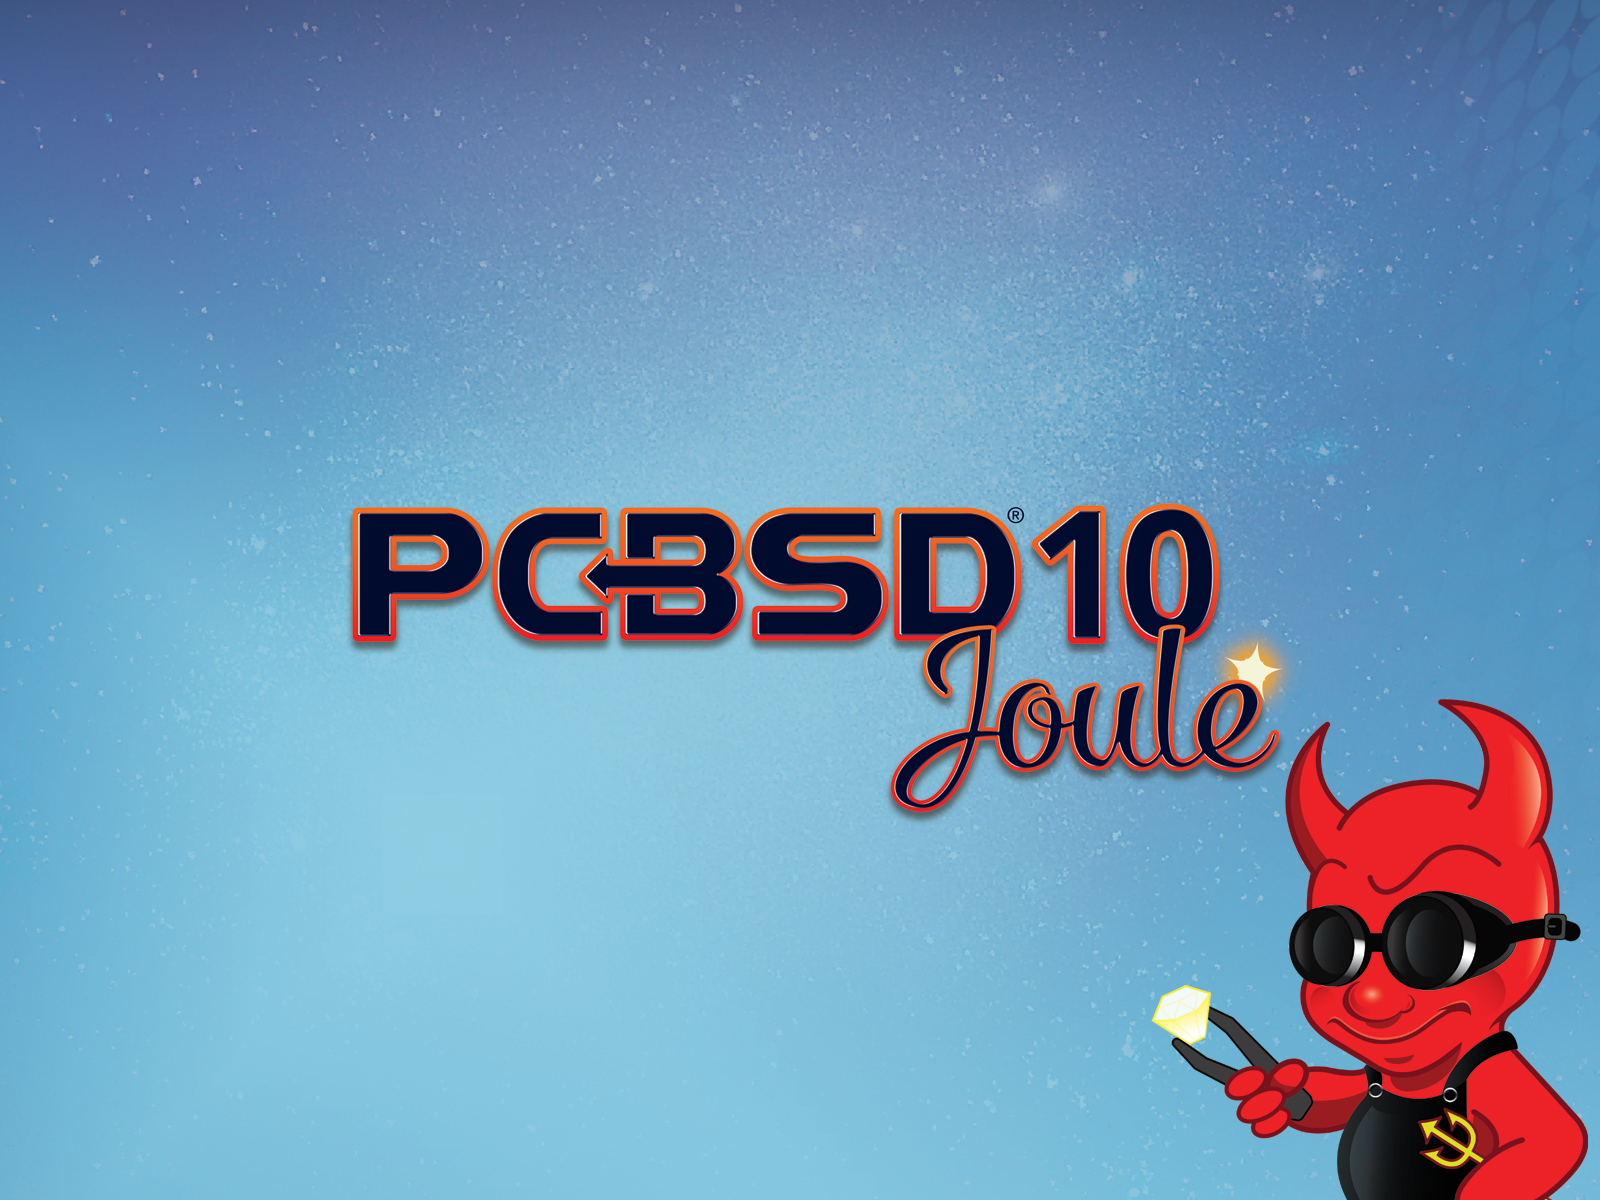 PCBSD_10_Joule_WP_1600x1200_v2.jpg